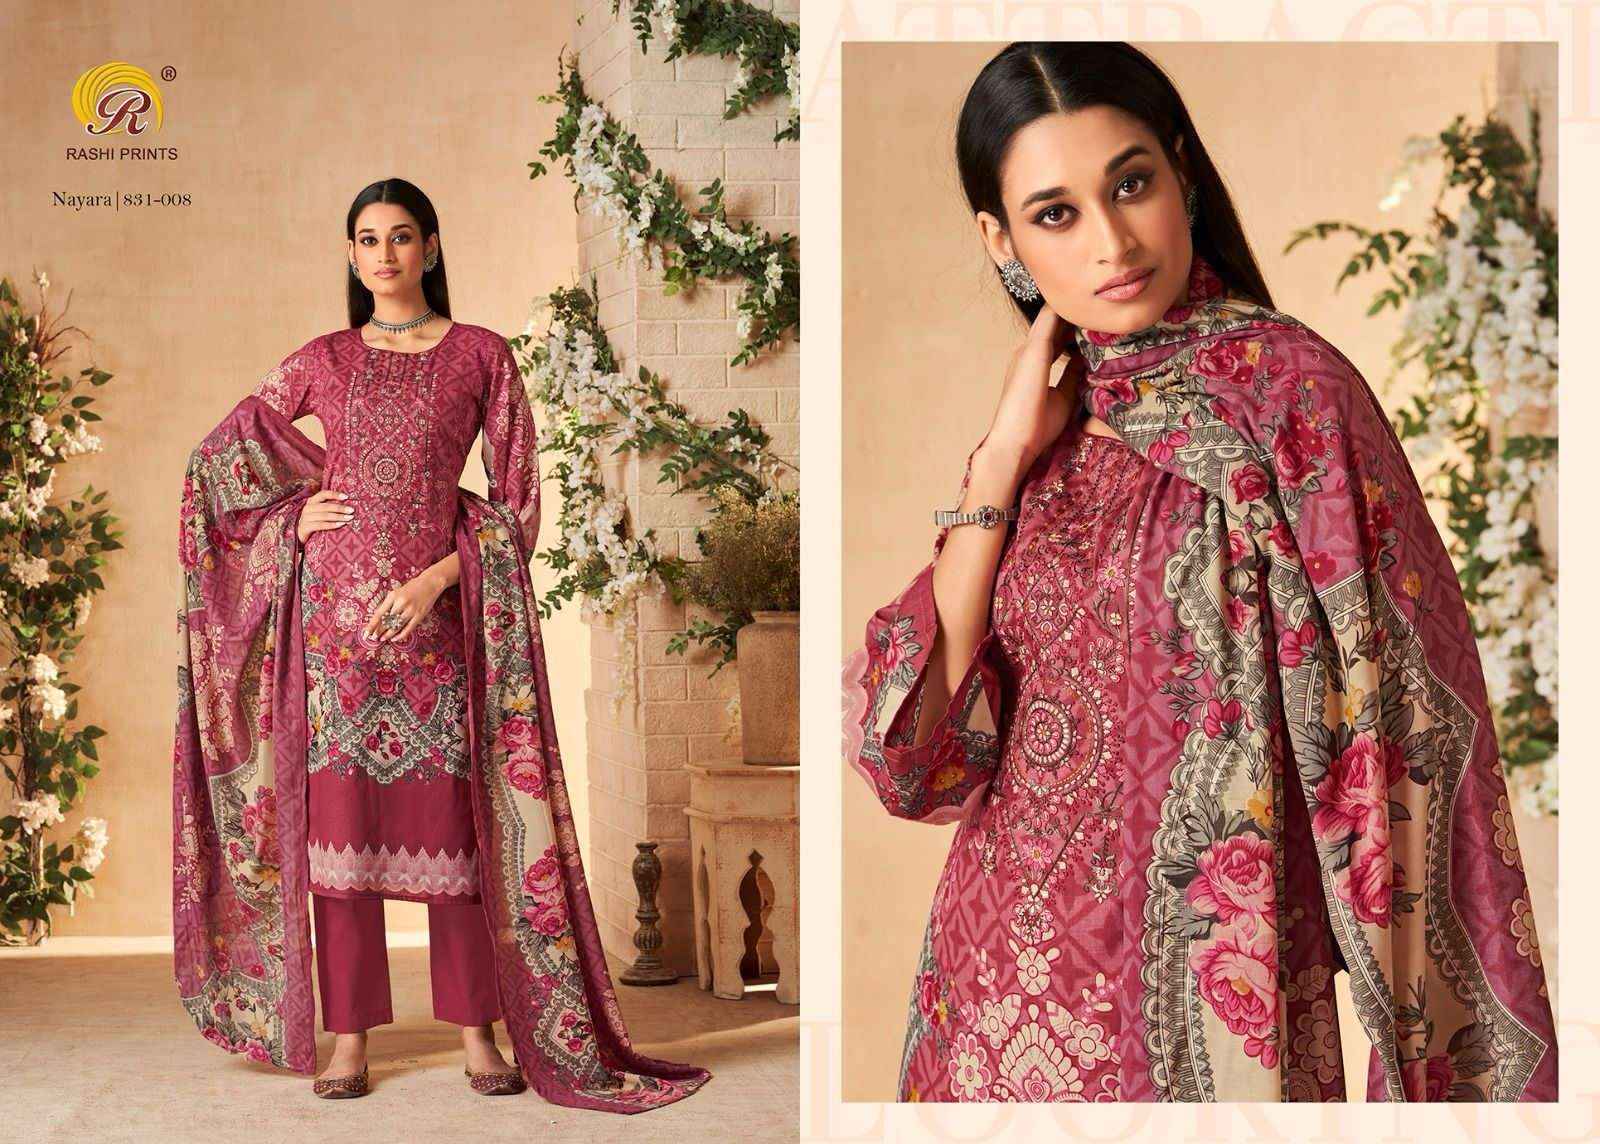 Rashi Prints Nayara Vol 31 Cambric Cotton Dress Material 8 pcs Catalogue